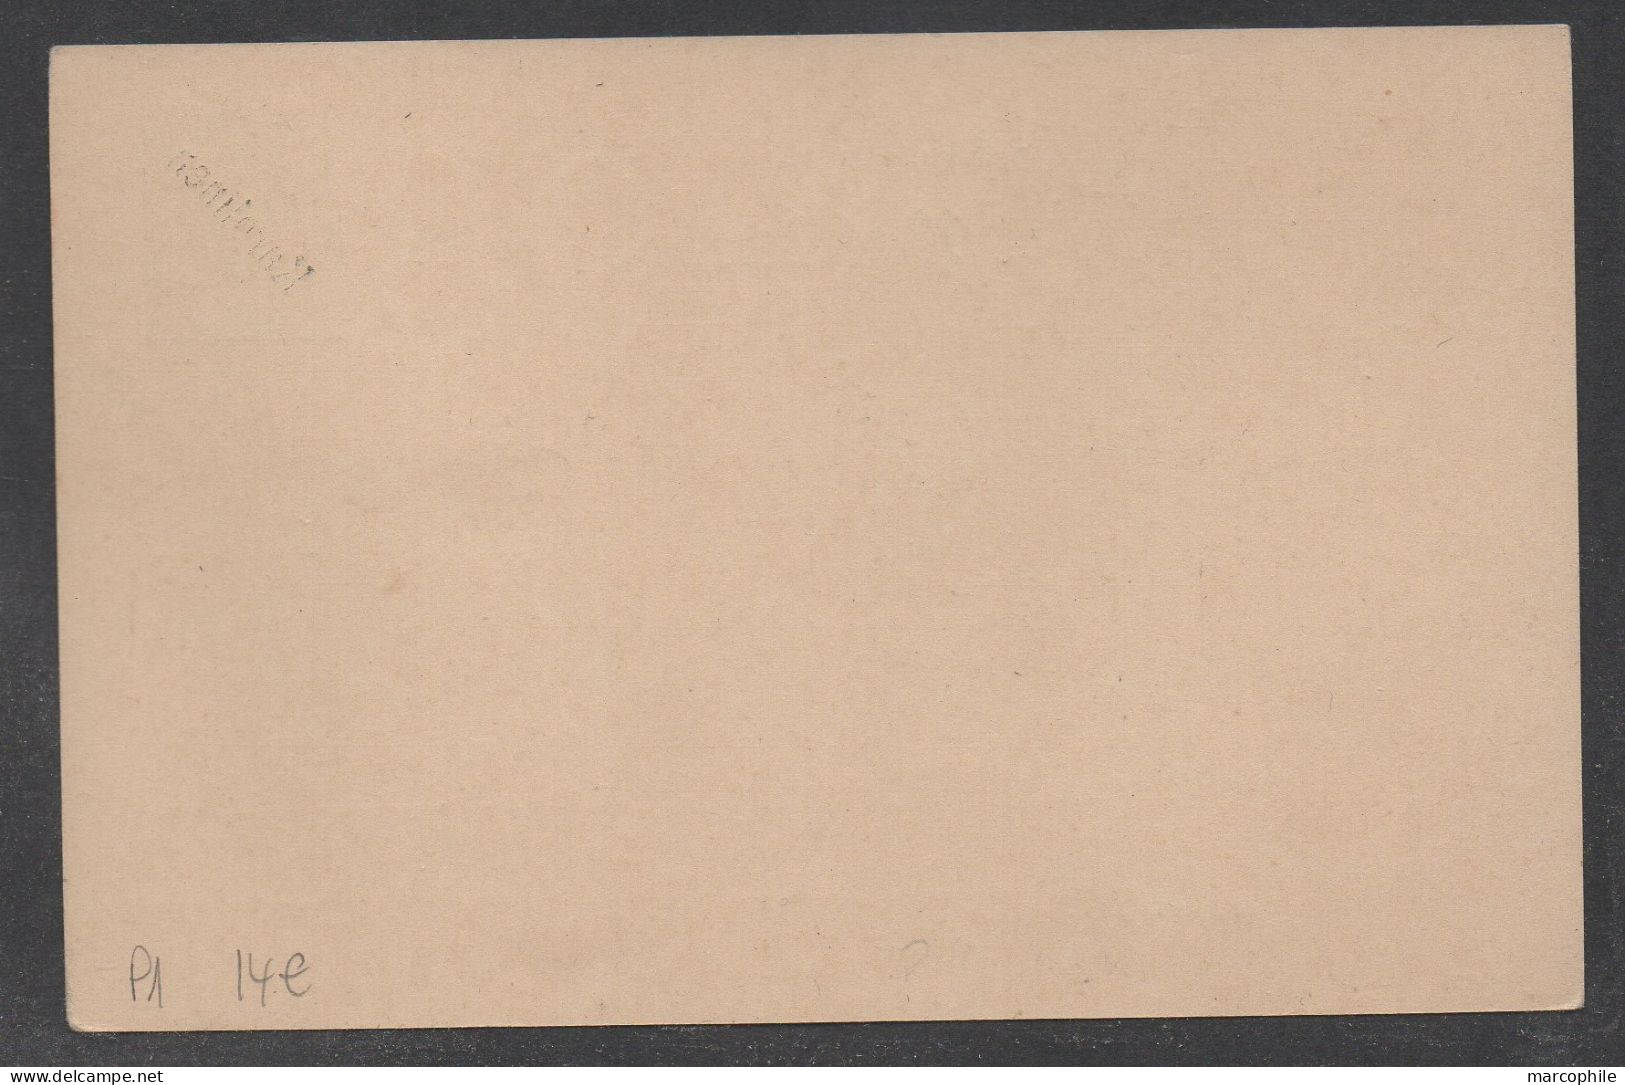 KAROLINEN -  CAROLINES / 1899 # P1 - GSK OHNE DATUM  - ENTIER POSTAL SANS DATE / KW 14.00 EURO - Karolinen